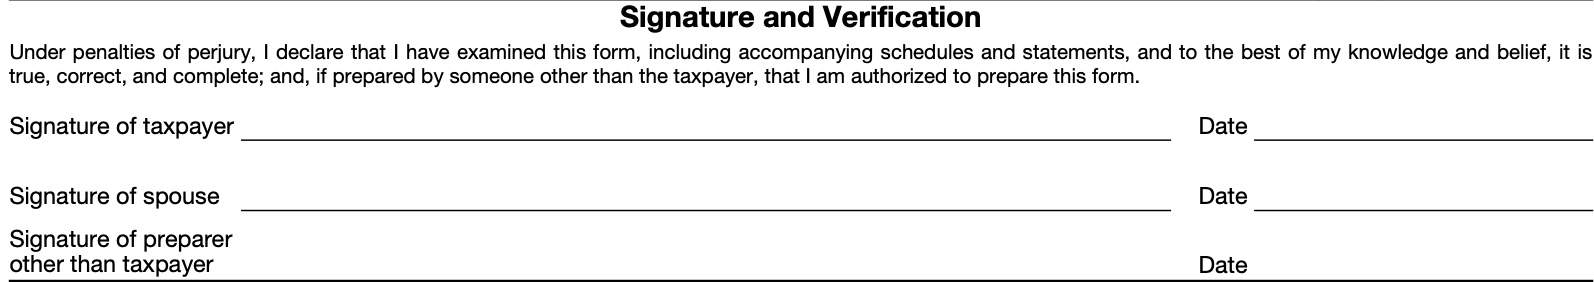 signature and verification